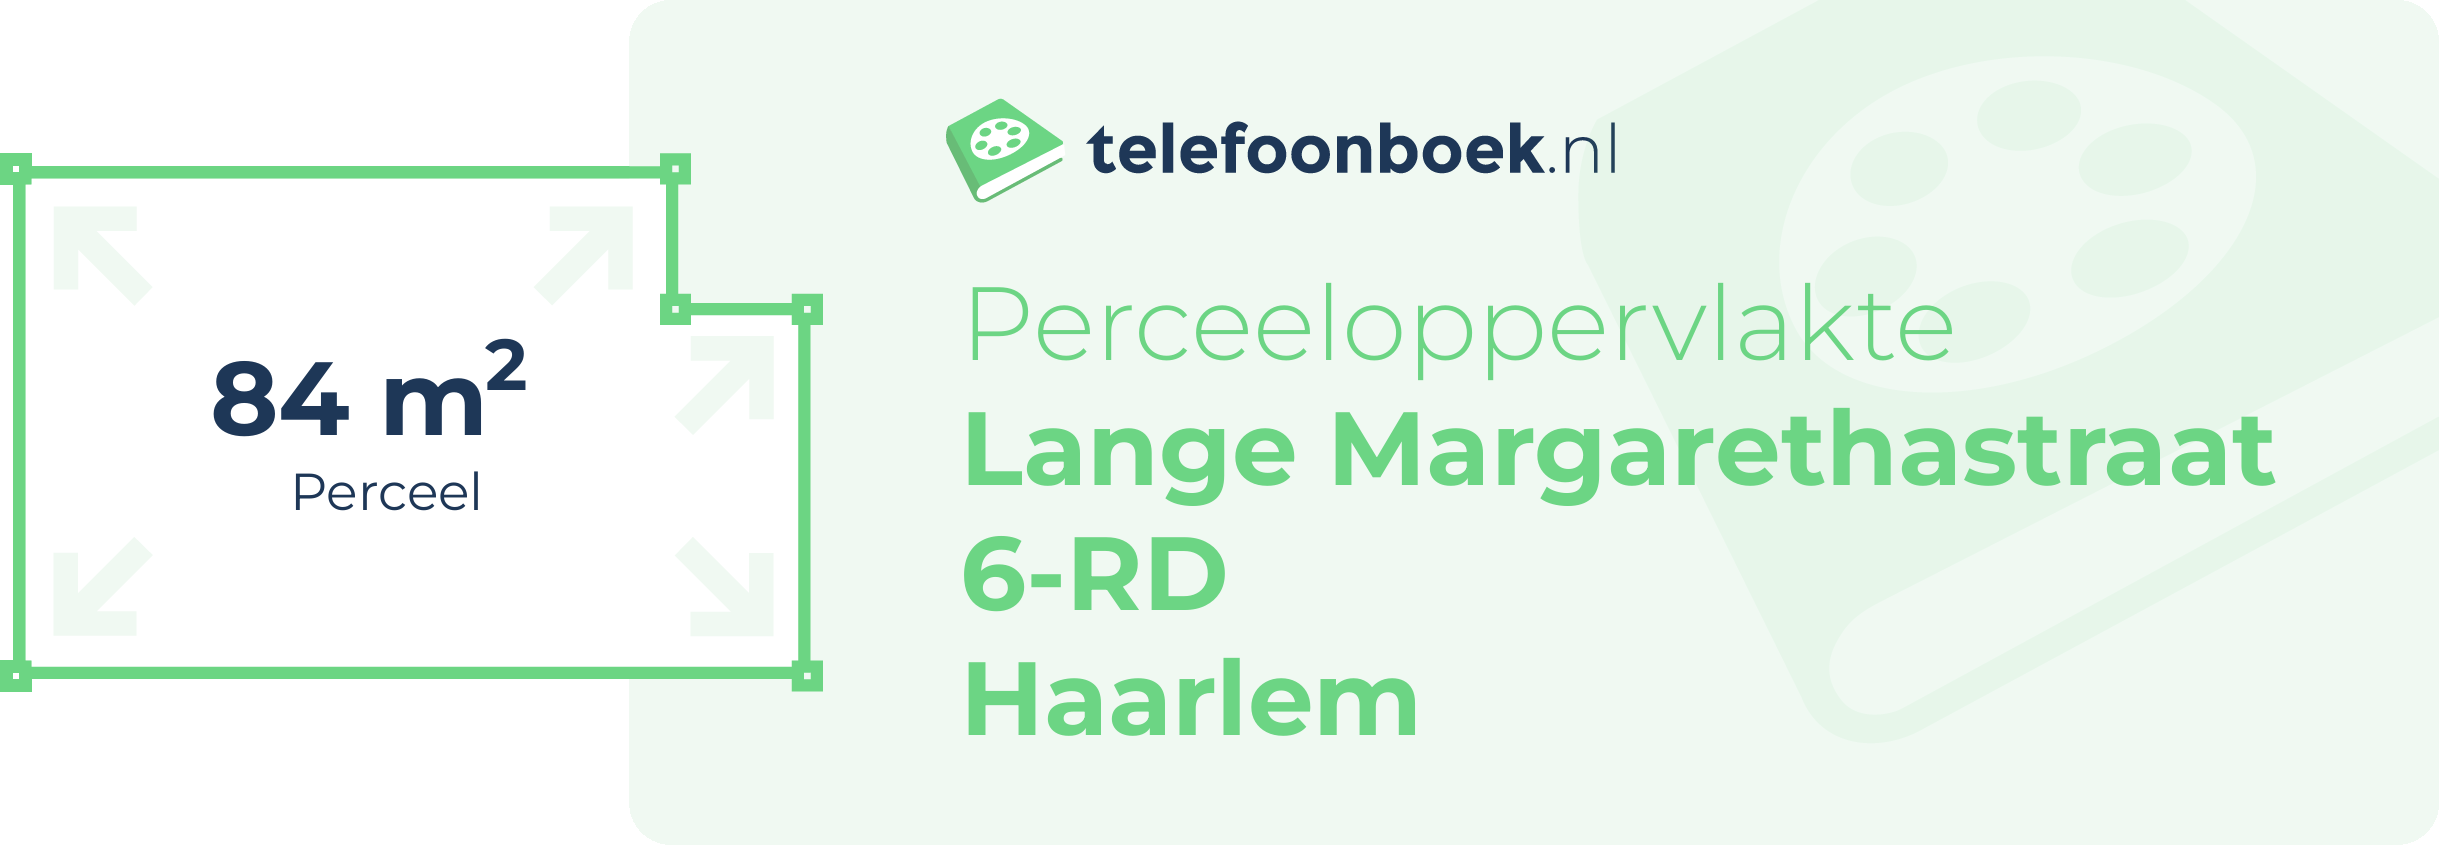 Perceeloppervlakte Lange Margarethastraat 6-RD Haarlem